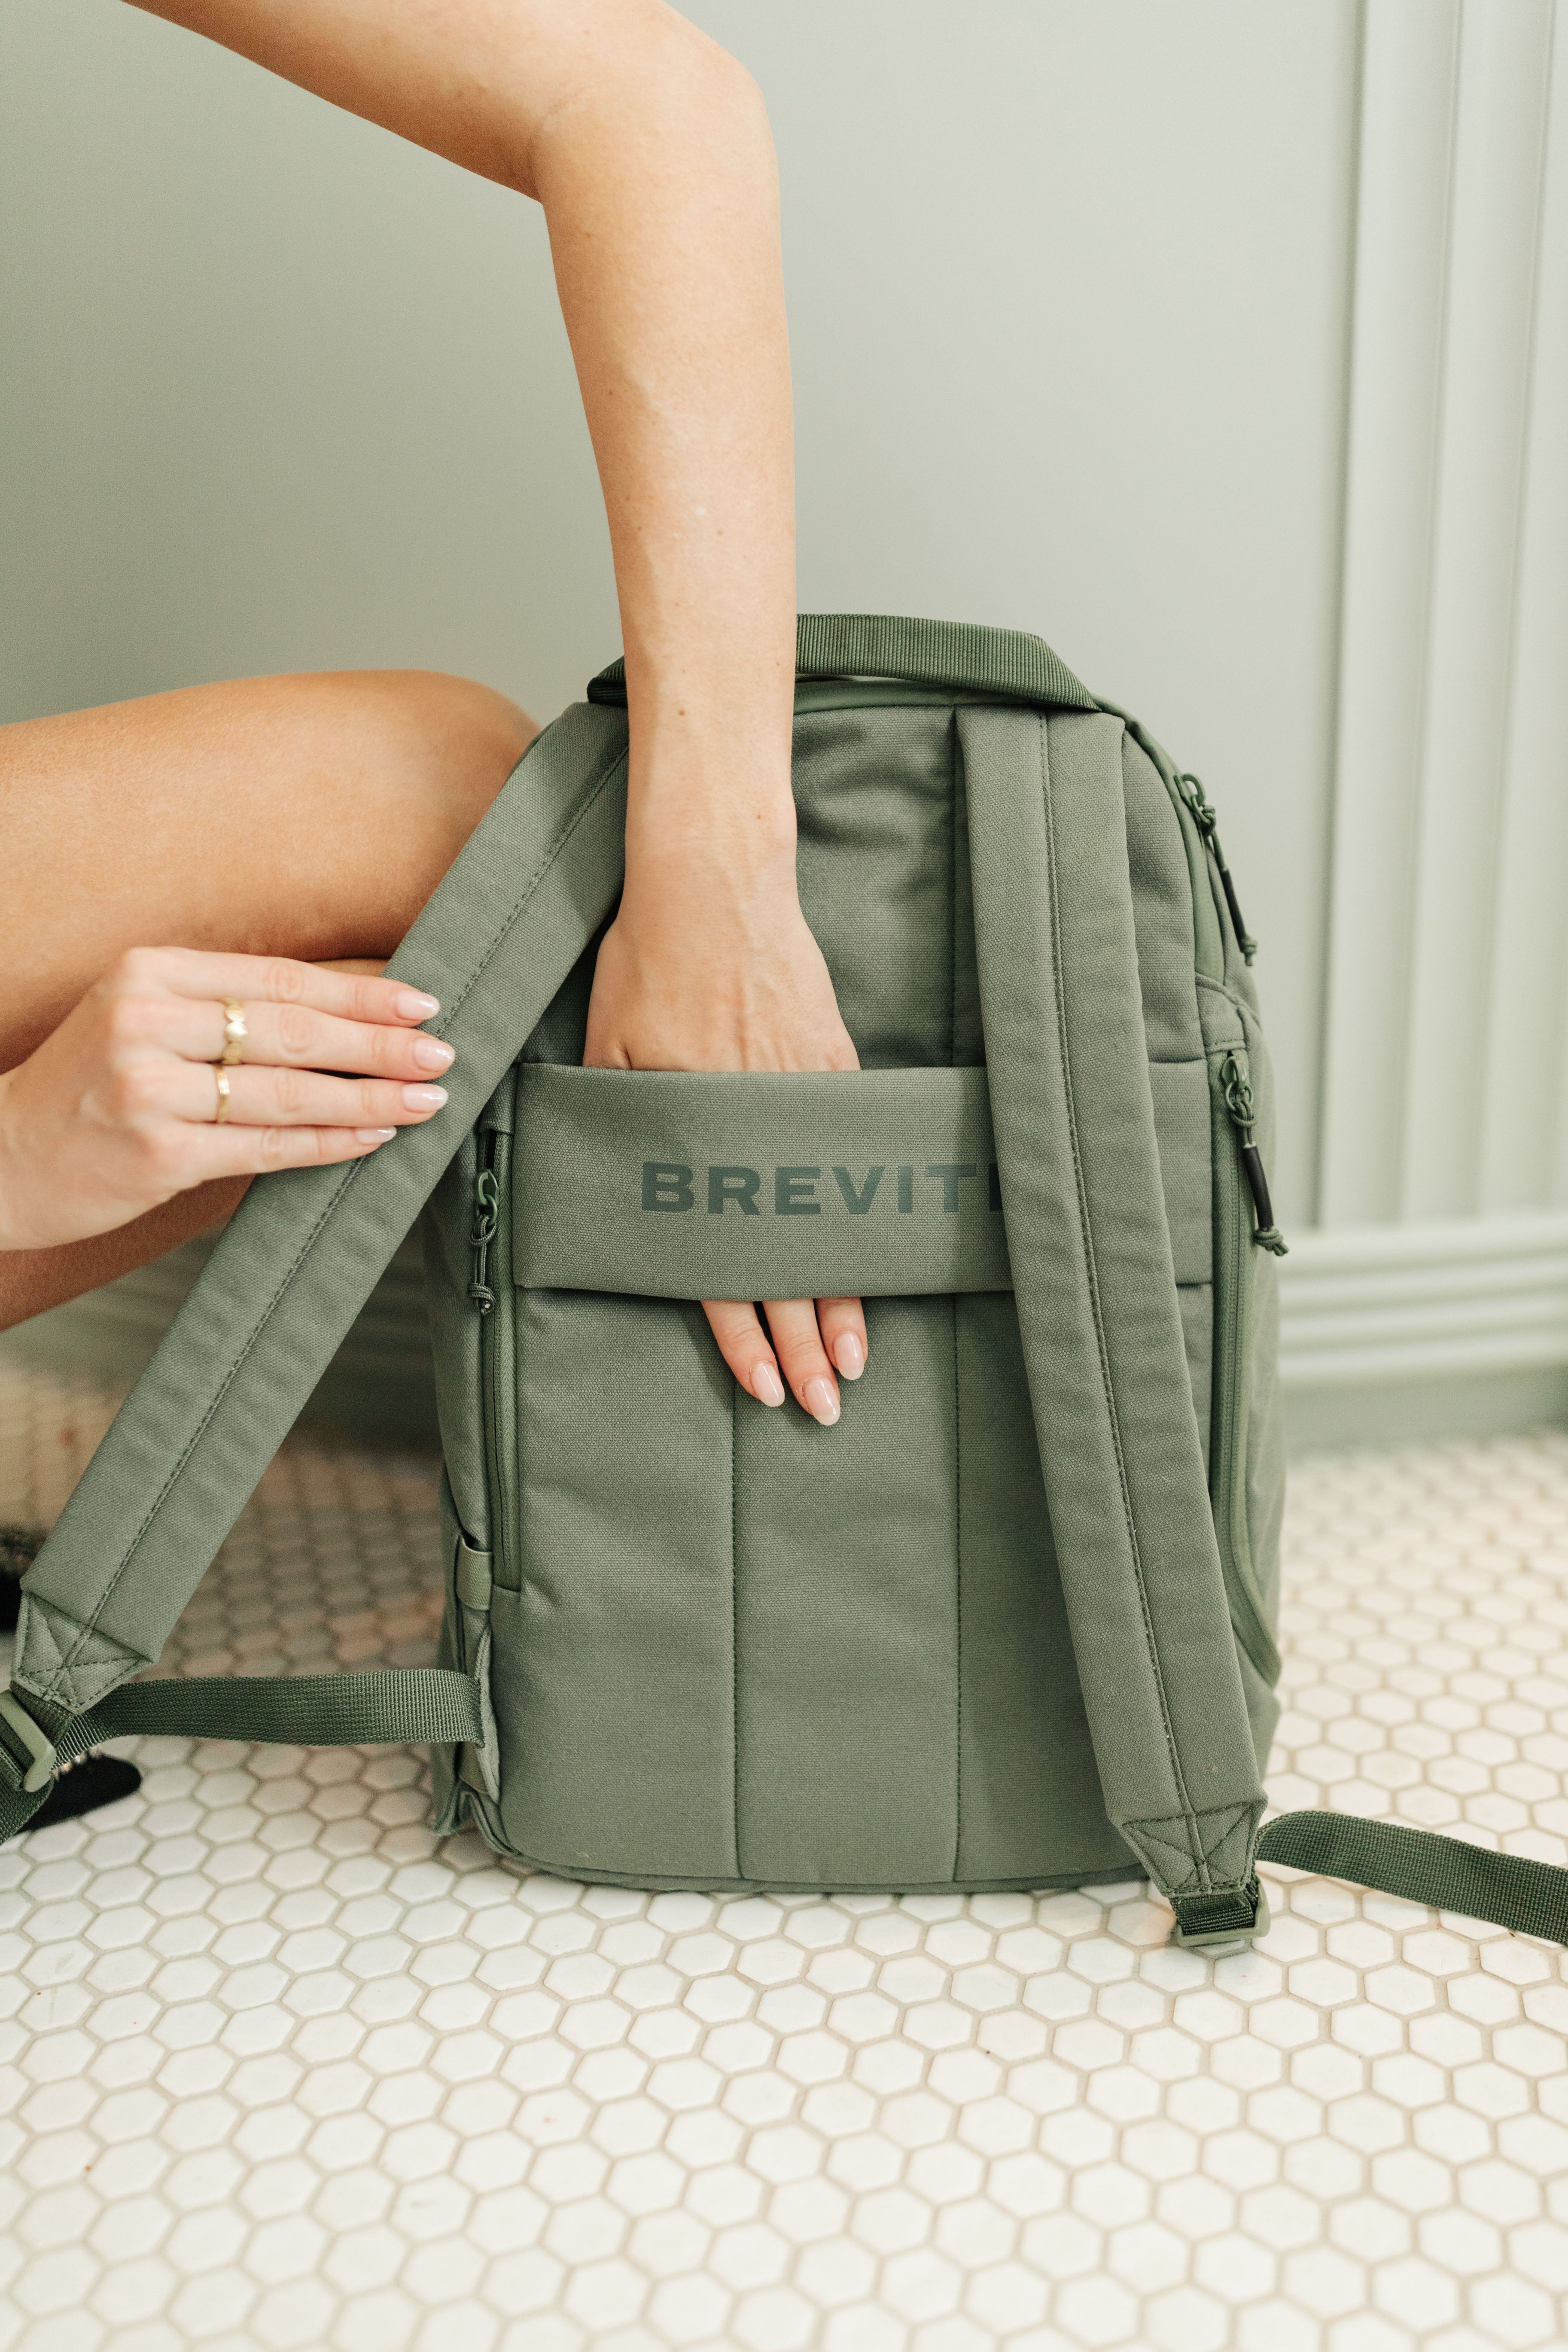 The Brevitē | Backpack for Everyday